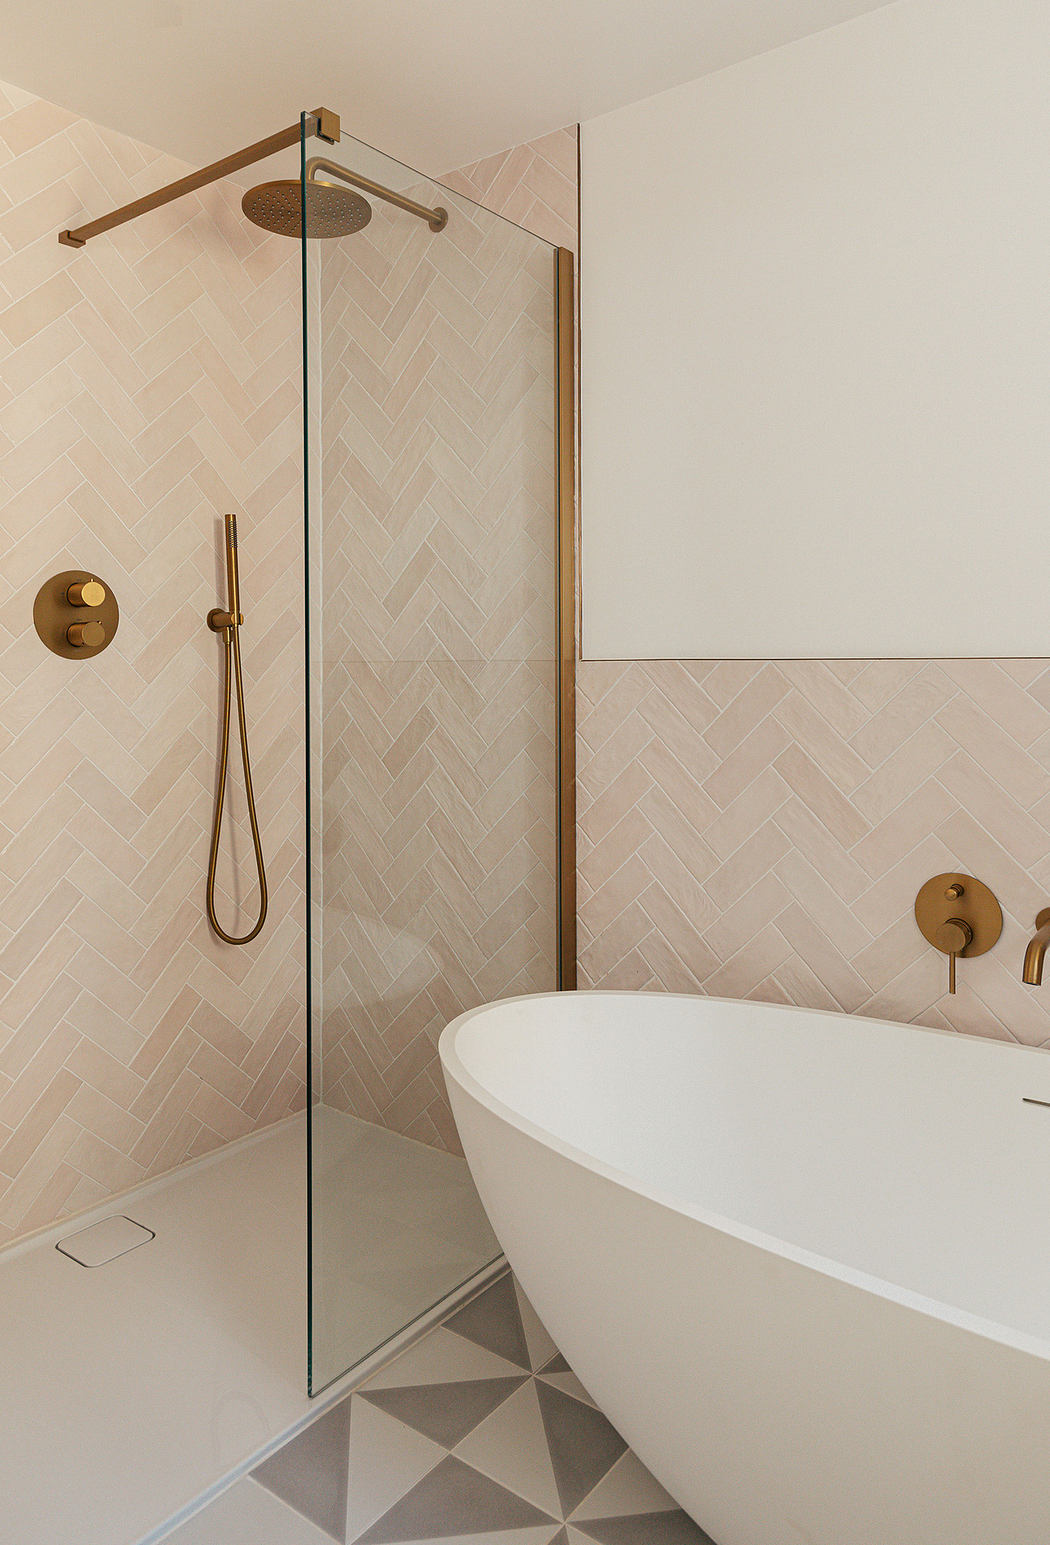 Modern bathroom with herringbone tiles, glass shower, and freestanding tub